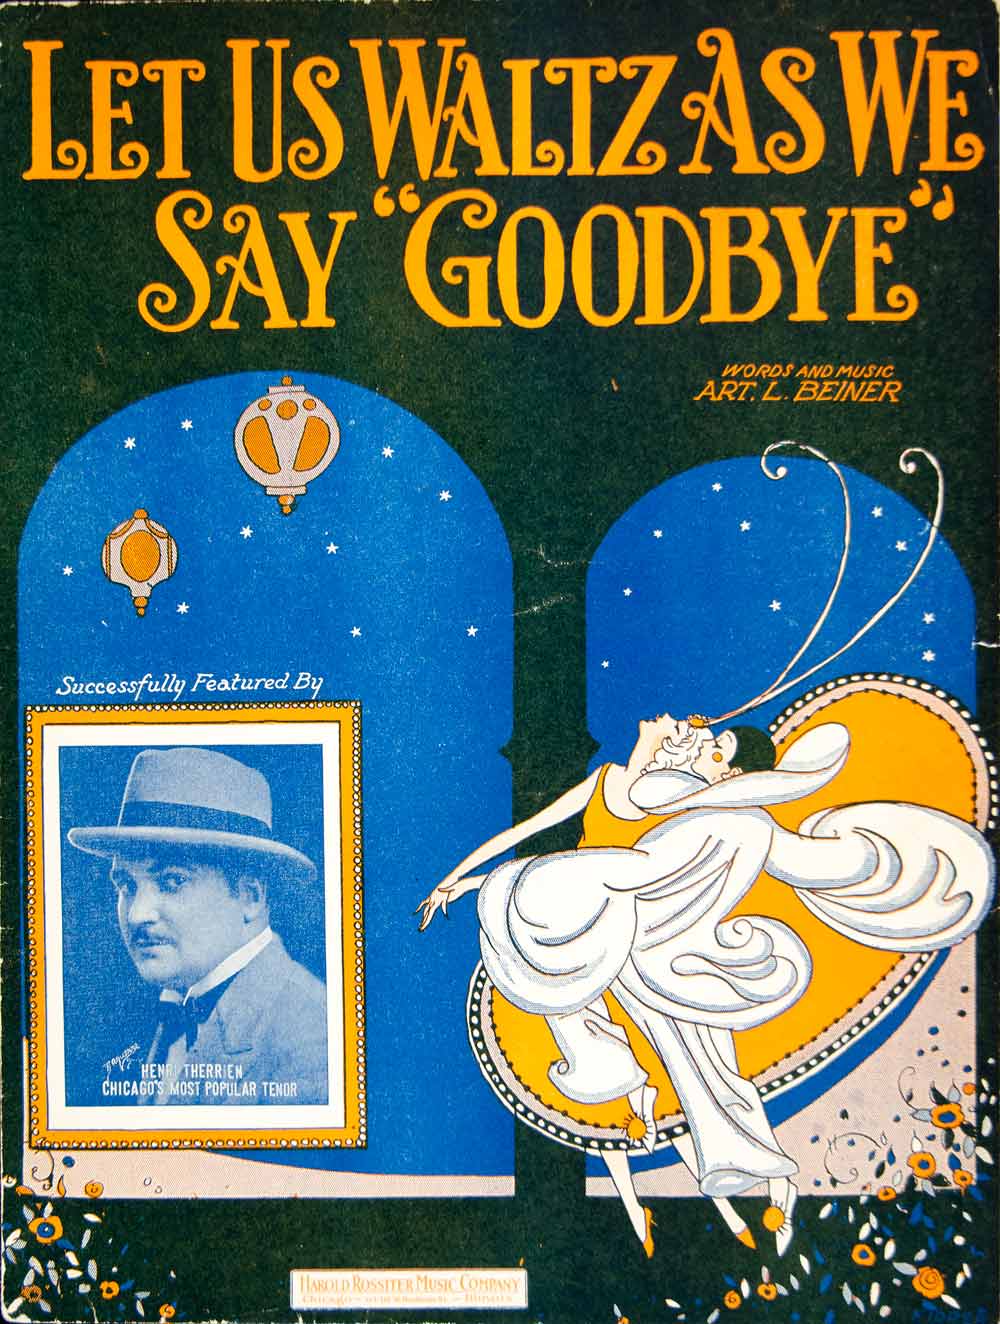 1925 Sheet Music Let Us Waltz As We Say Goodbye Henri Therrien Art Beiner ZSMA1